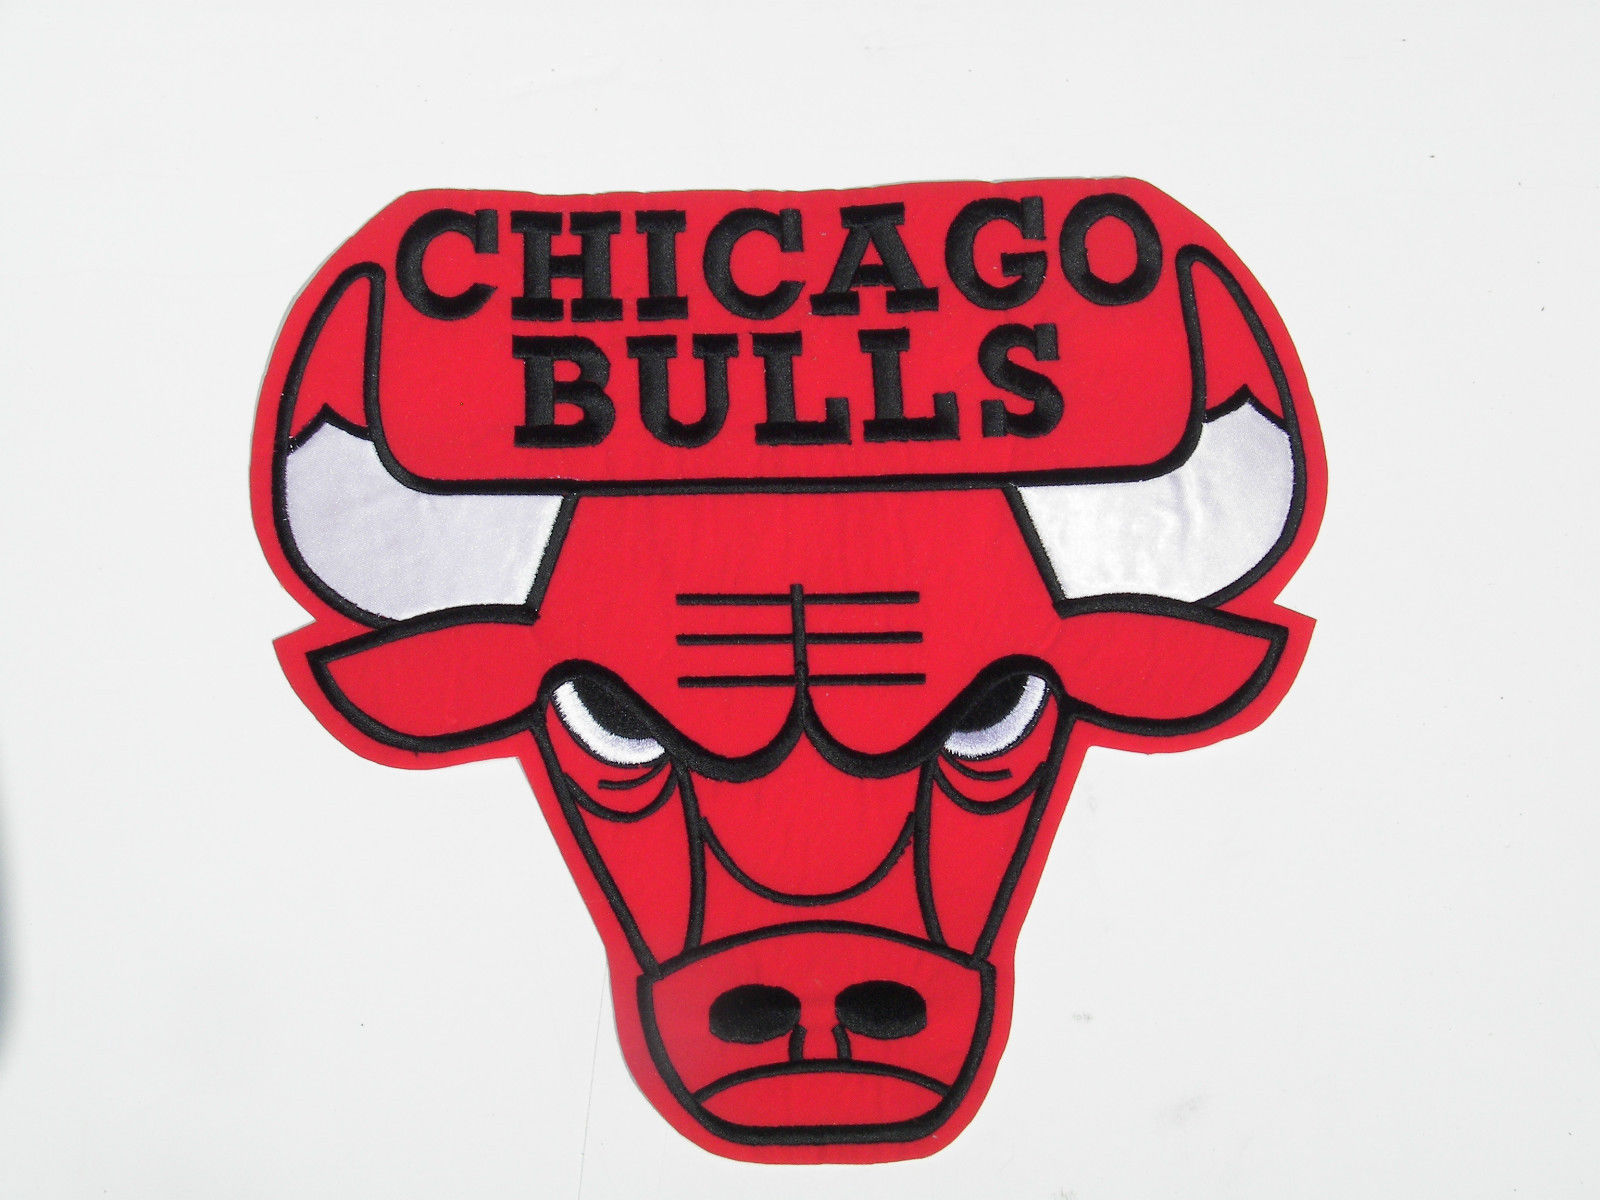 Chicago Bulls Jacket Emblem Logo Patch | eBay